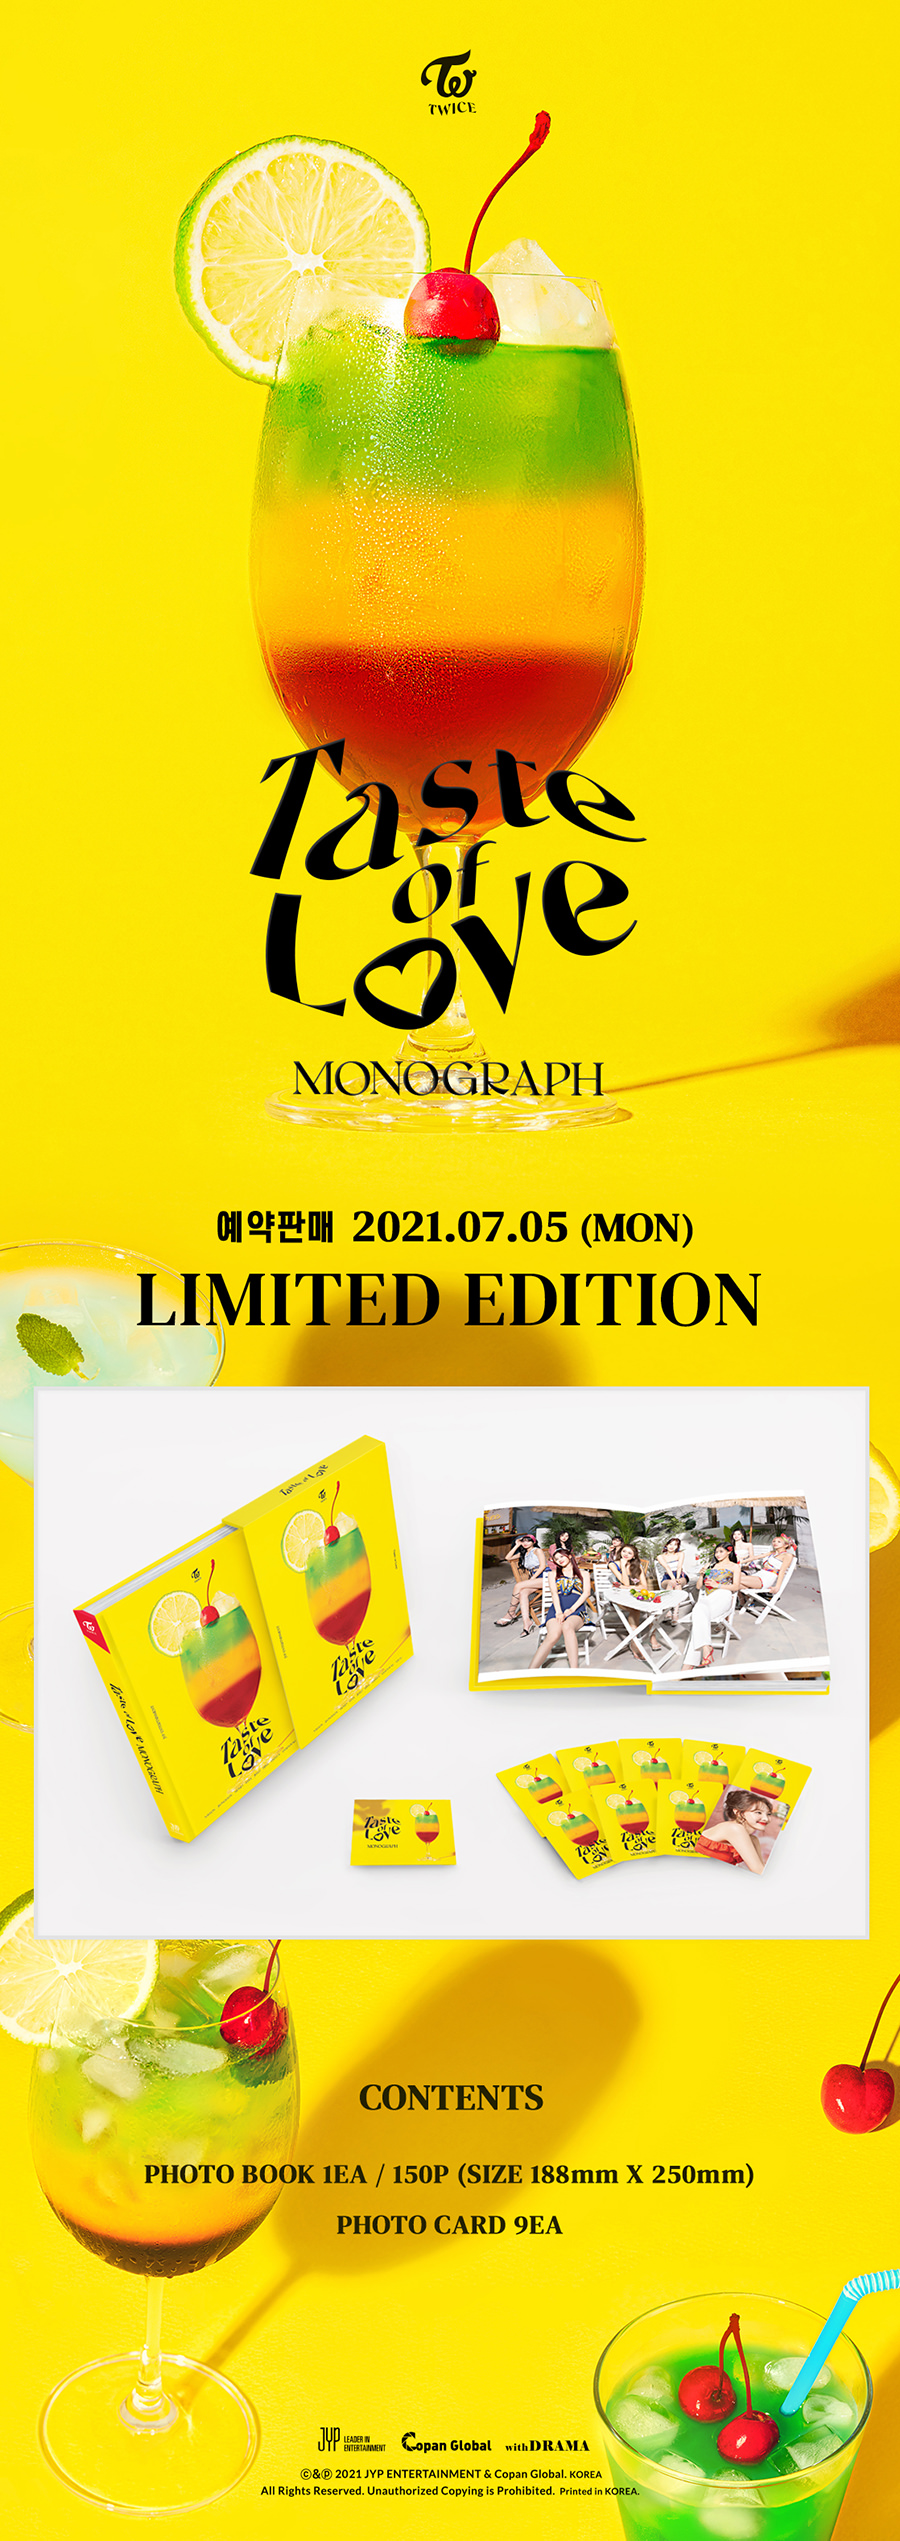 twice taste of love monograph